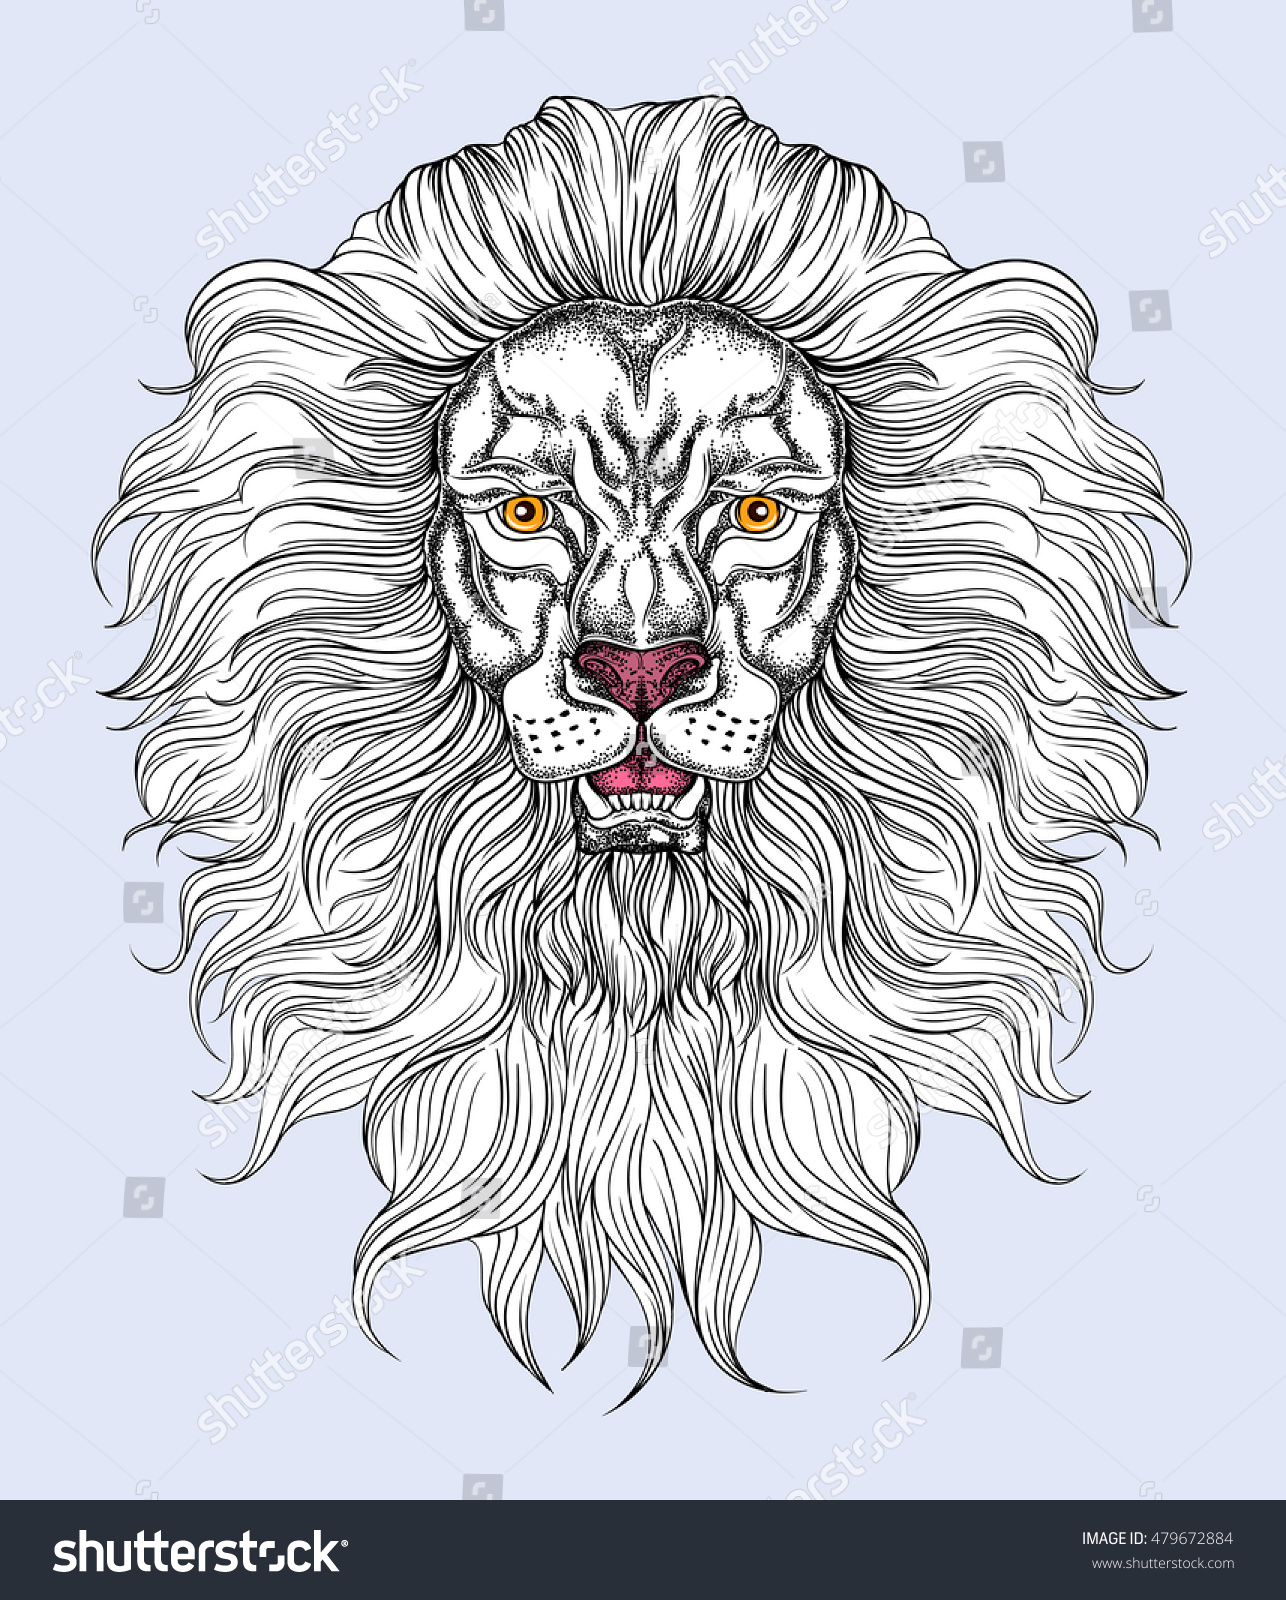 Hand Drawn Lion Head Line Art Stock Vector (Royalty Free) 479672884